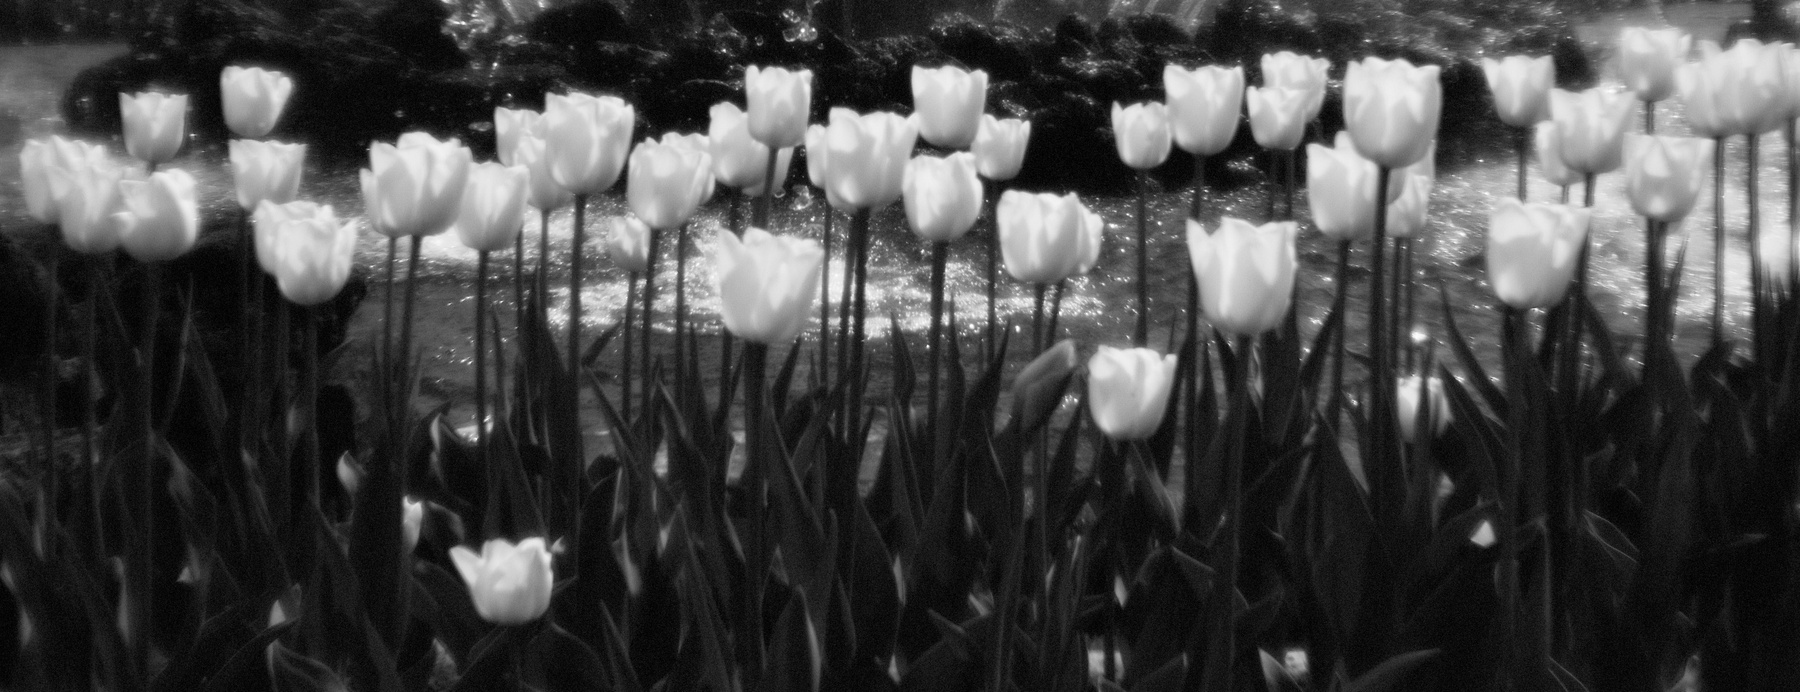 Тюльпаны монохром тюльпаны весна свет